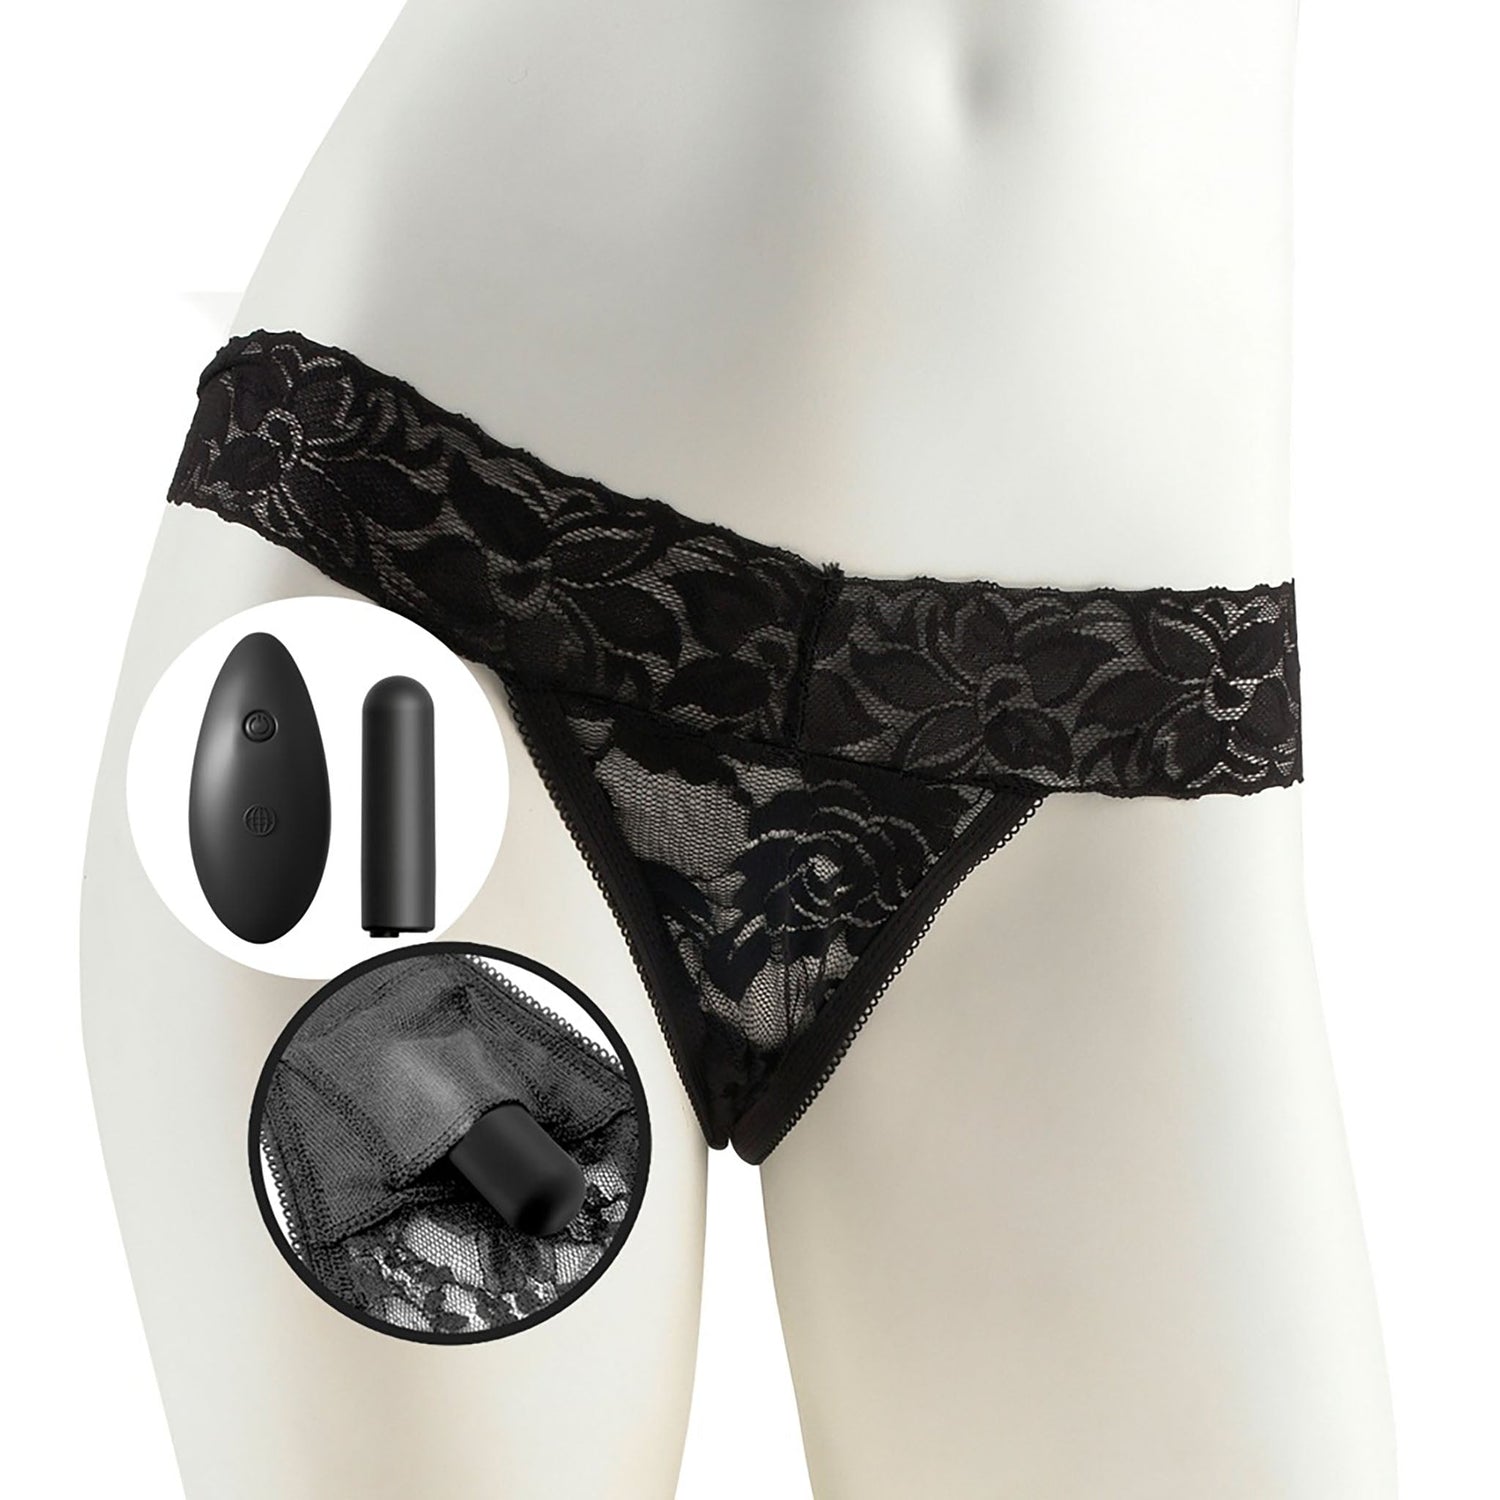 Plus size Remote Control Vibrating Panties, Panty Vibrator